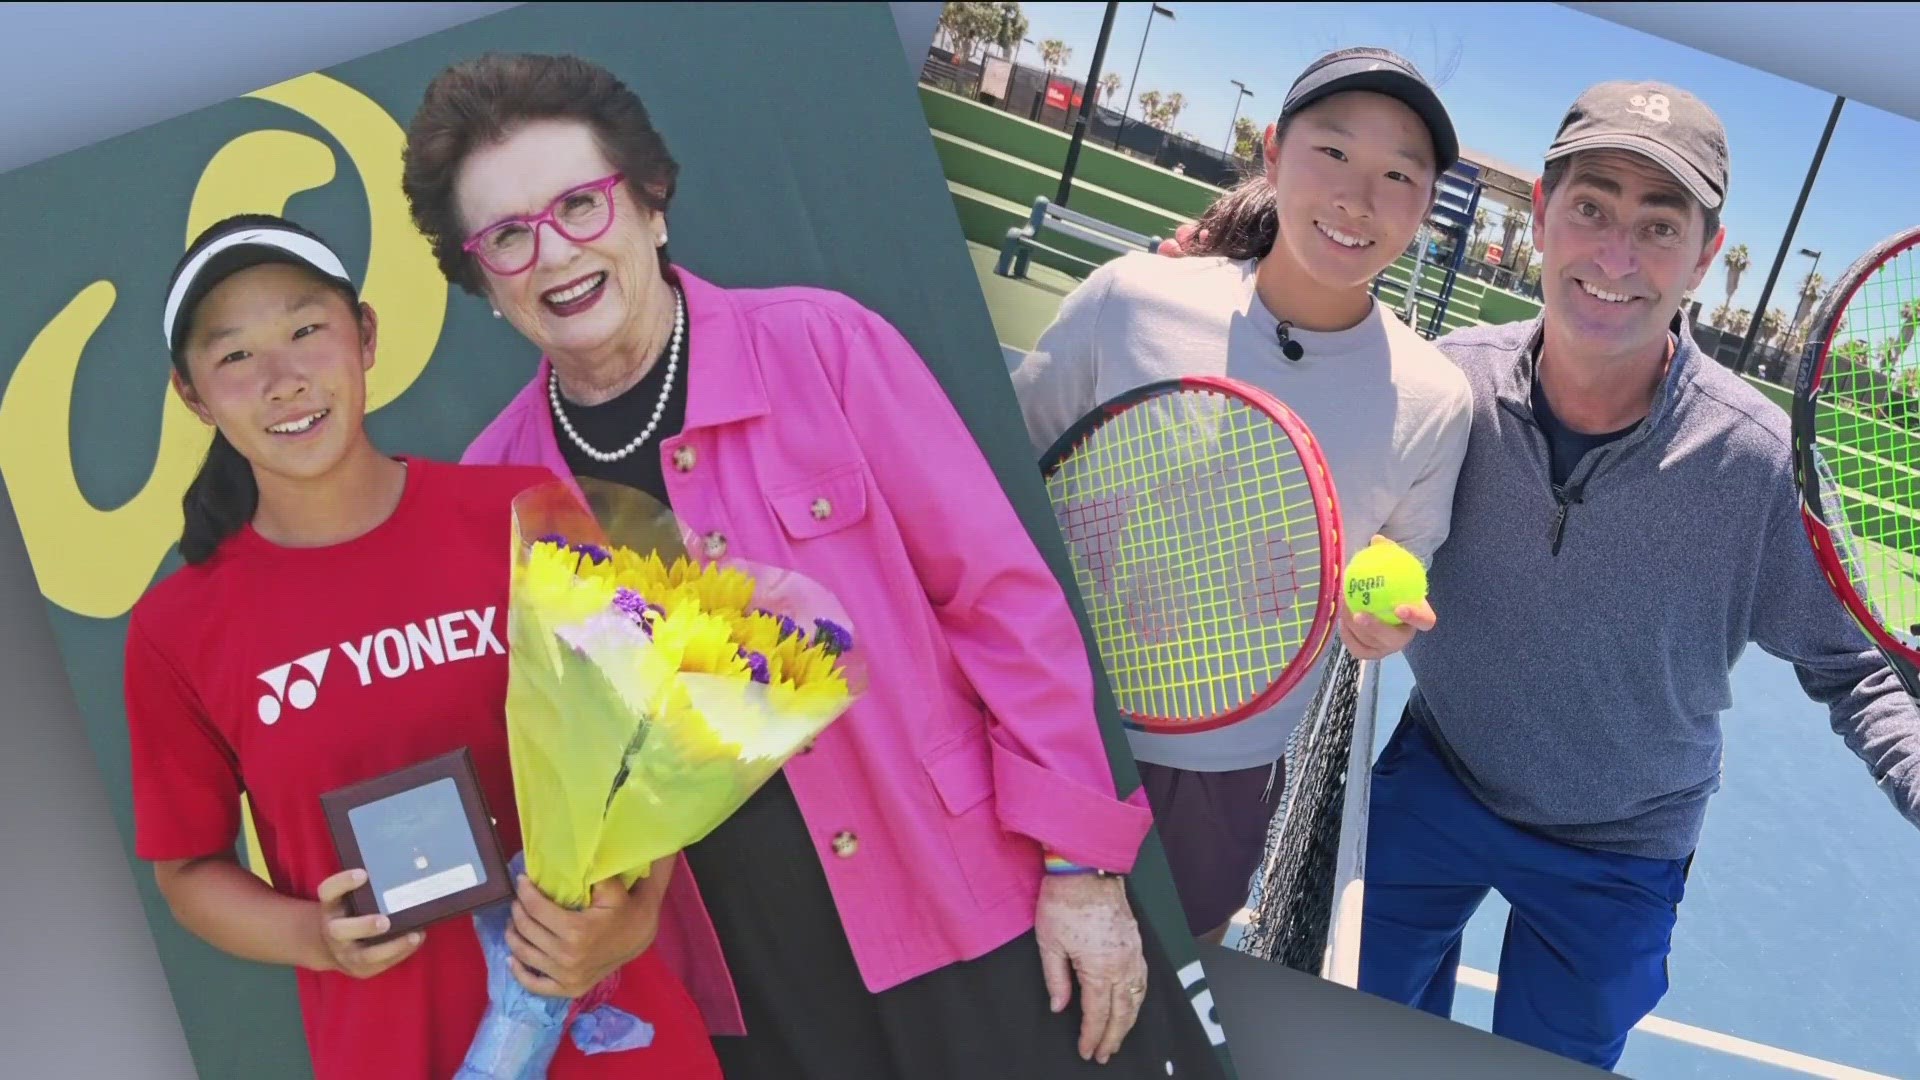 San Diego tennis star recalls win in front of Billie Jean King cbs8